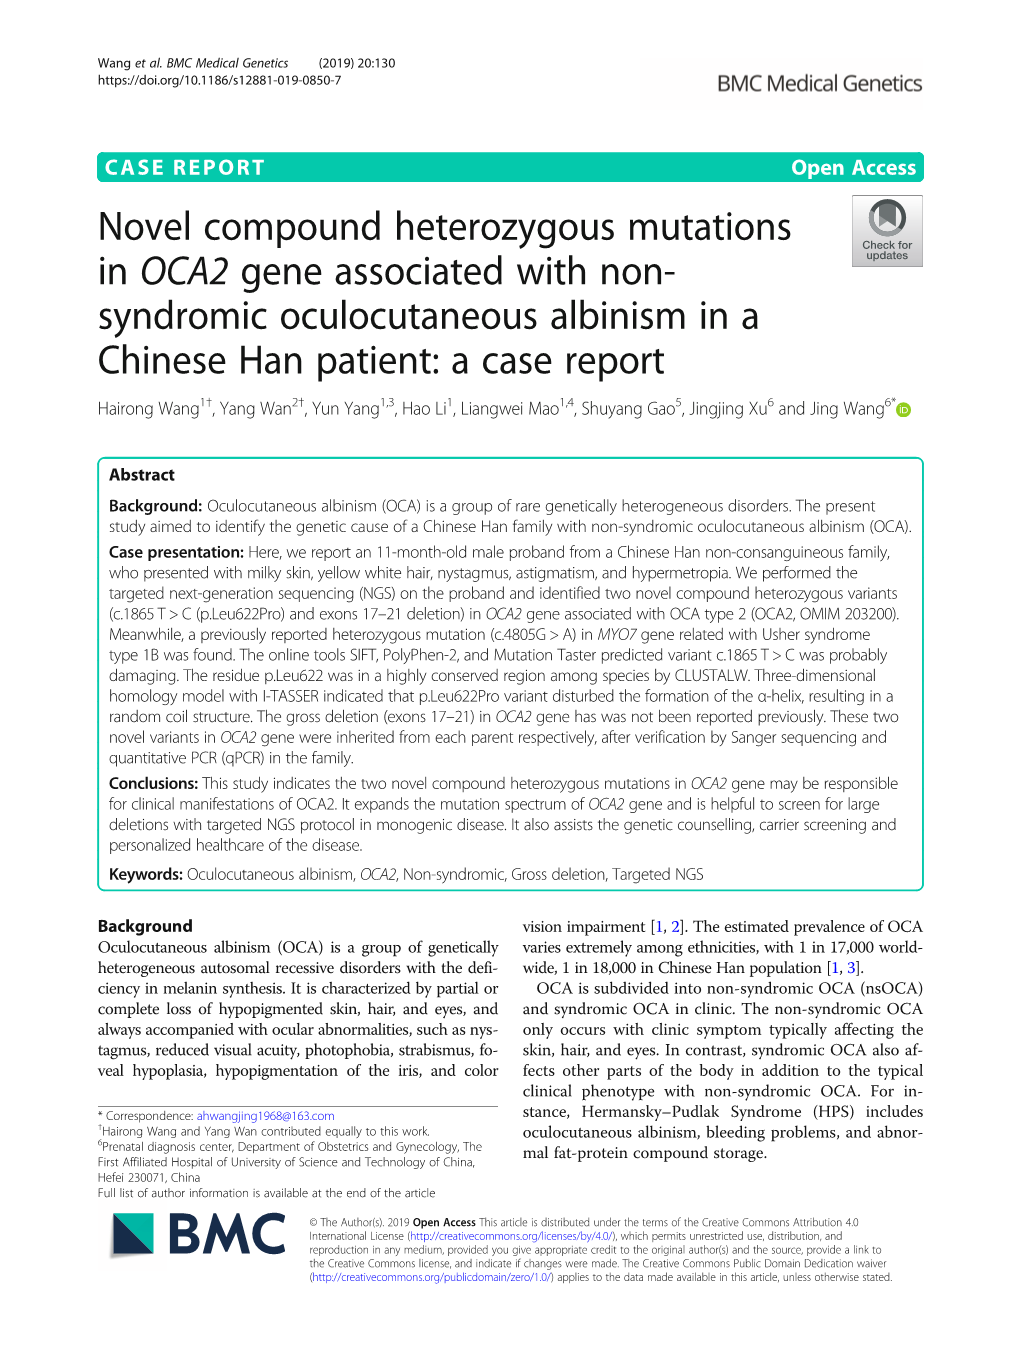 Novel Compound Heterozygous Mutations in OCA2 Gene Associated